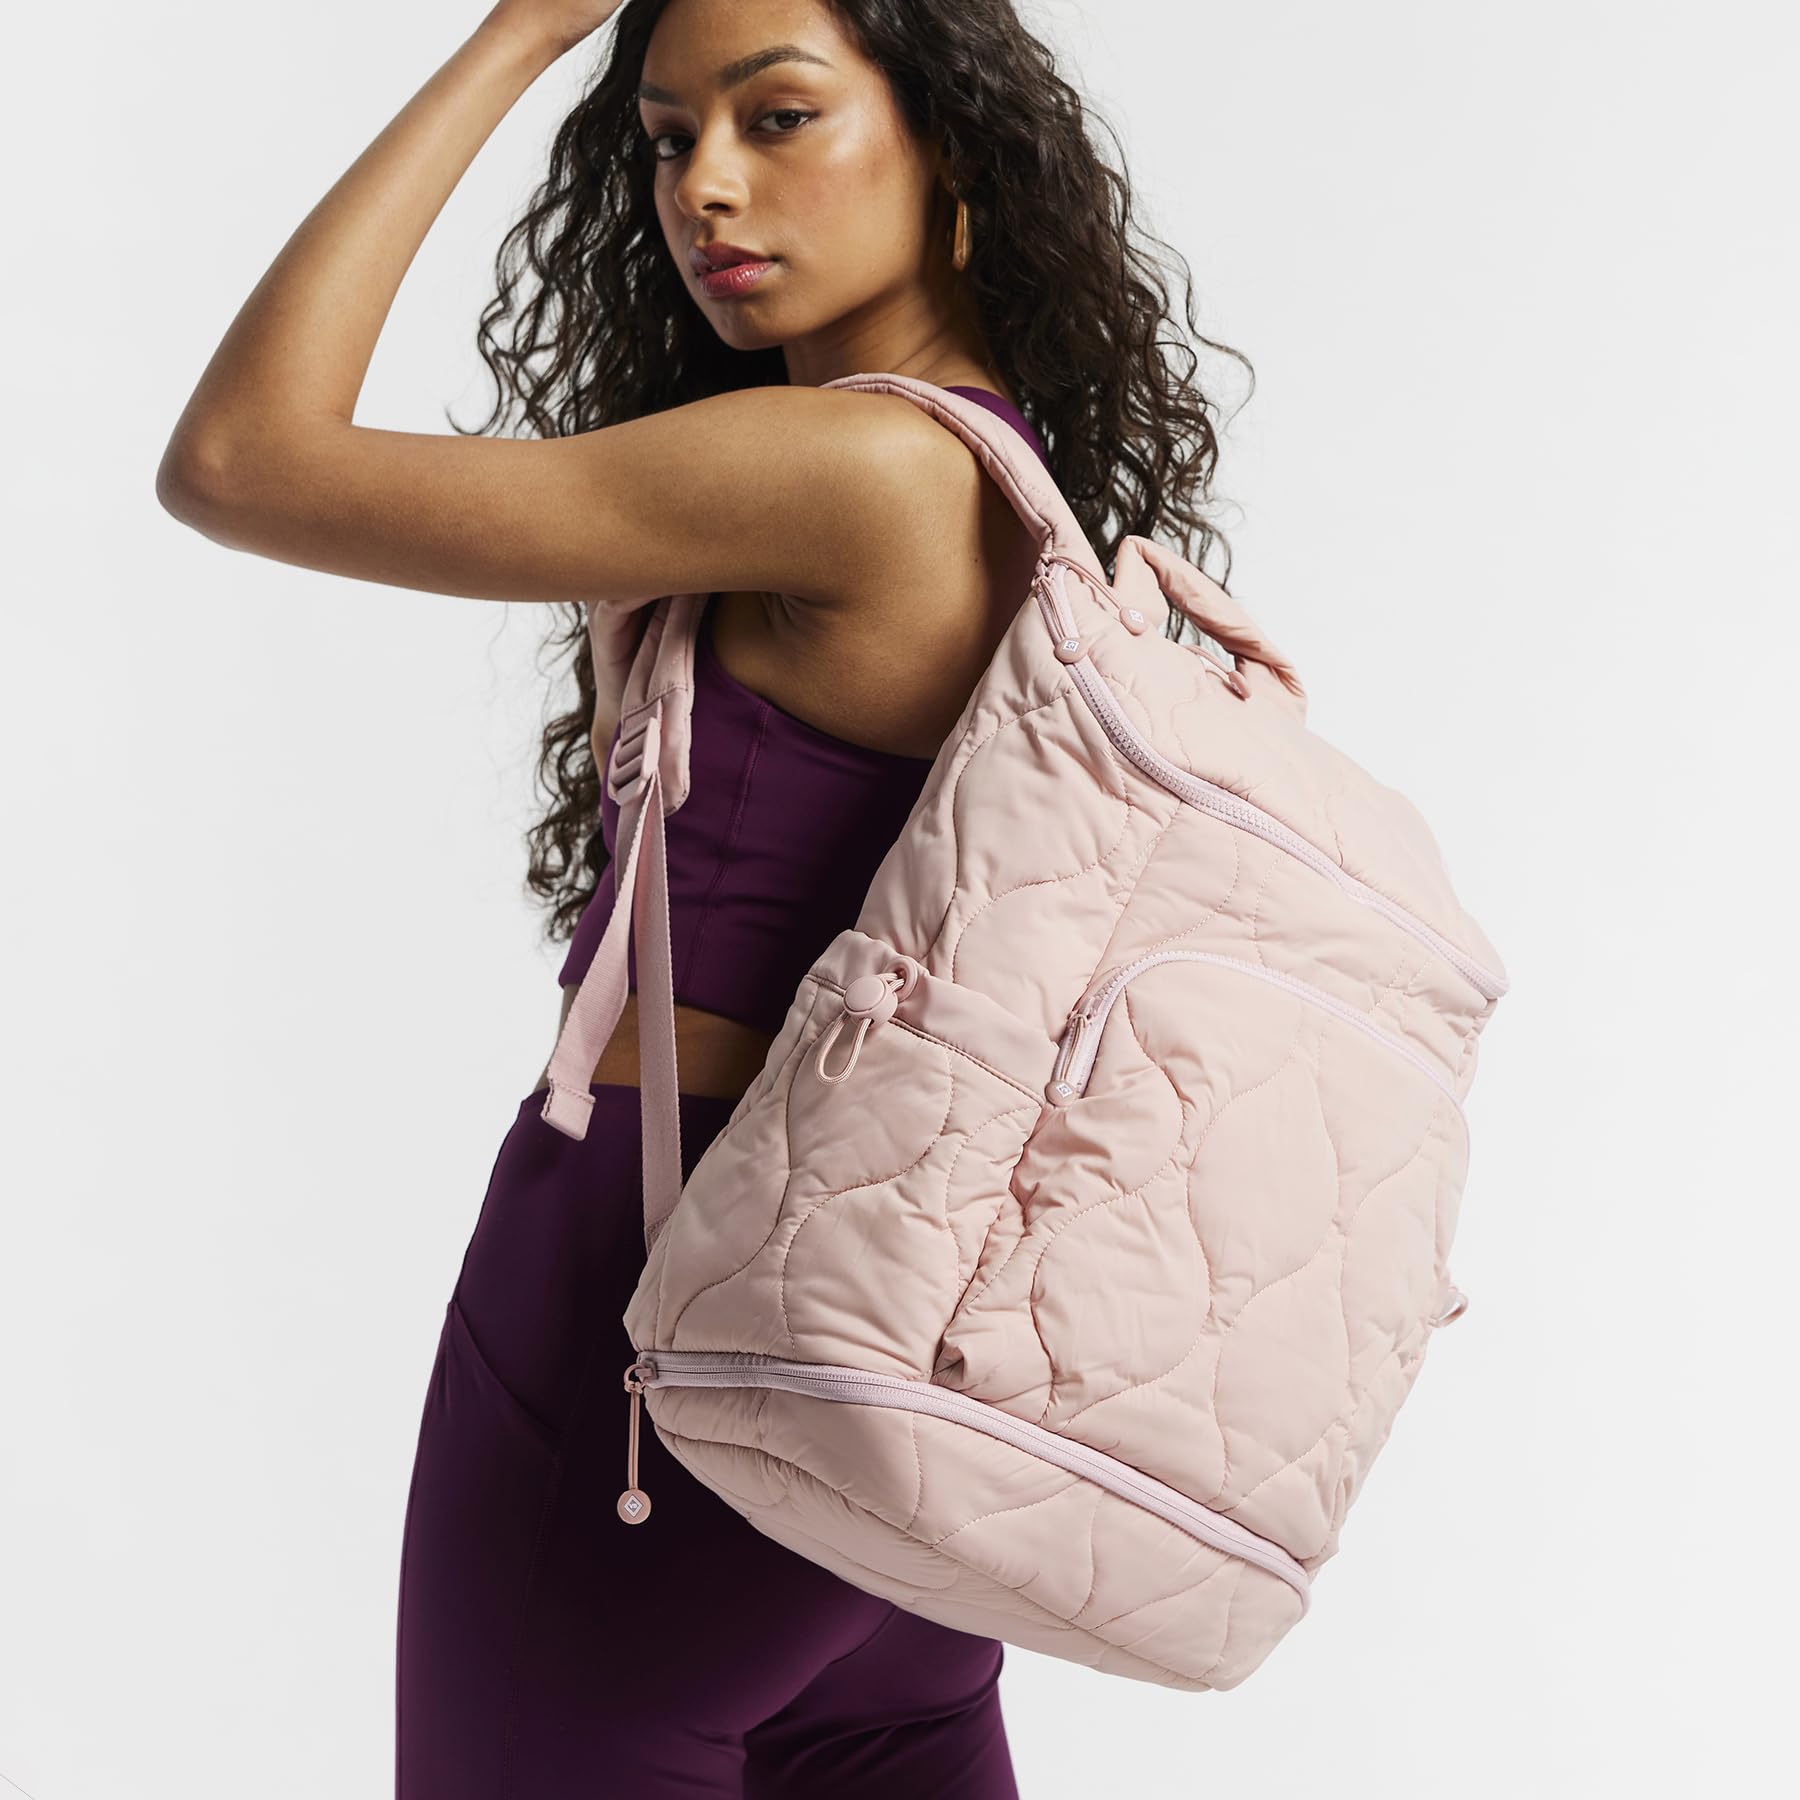 Vera Bradley Featherweight Commuter Backpack Travel Bag, Rose Quartz